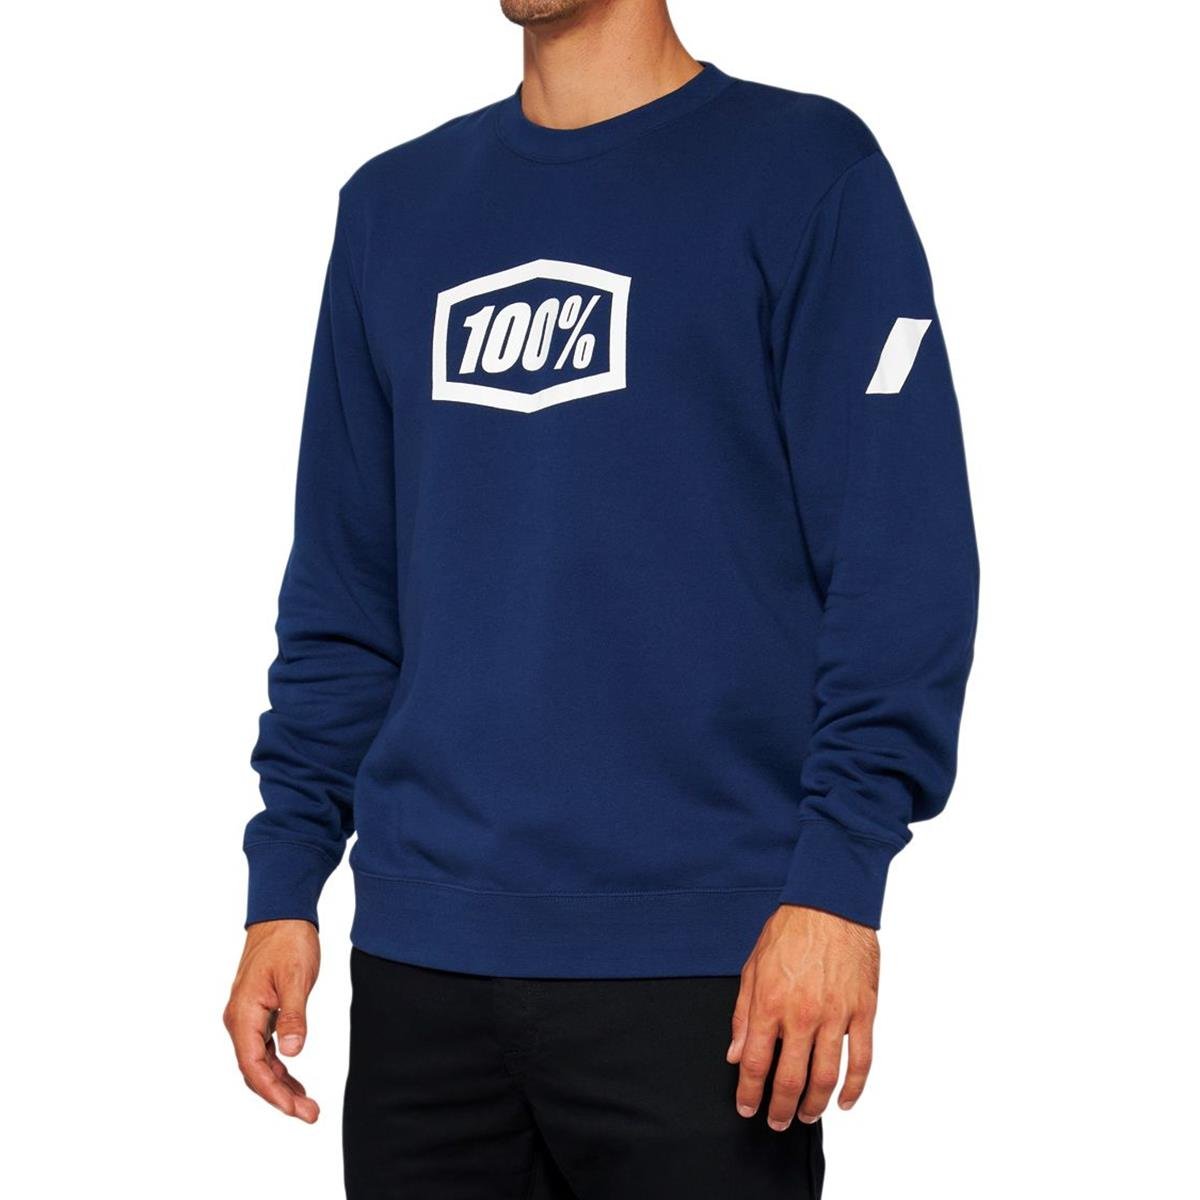 100% Sweater Icon Navy